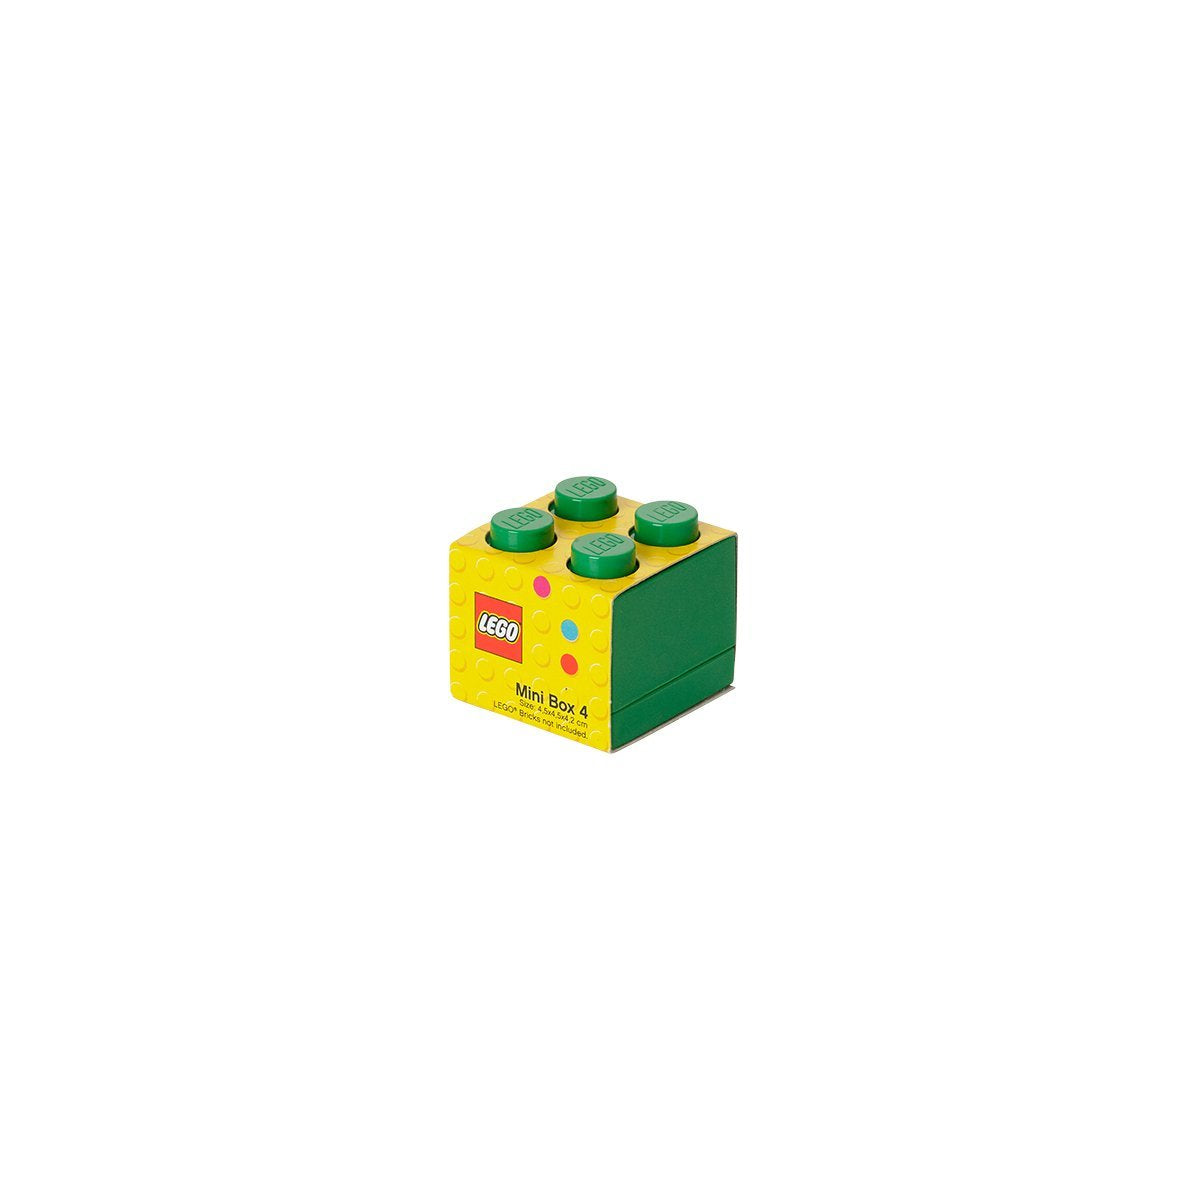 Lego Storage 40110630 4 Mini Box